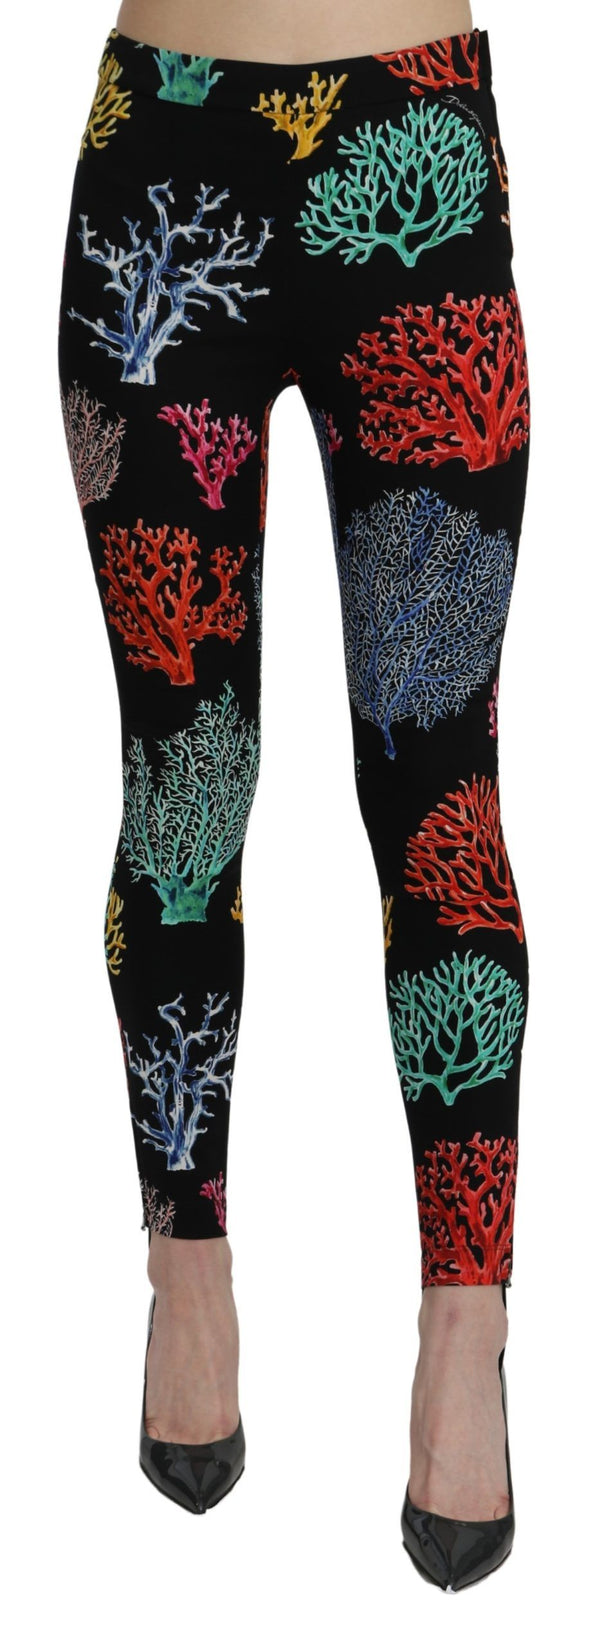 Dolce & Gabbana Black Coral Tights Silk Stretch Slim Fit Pants